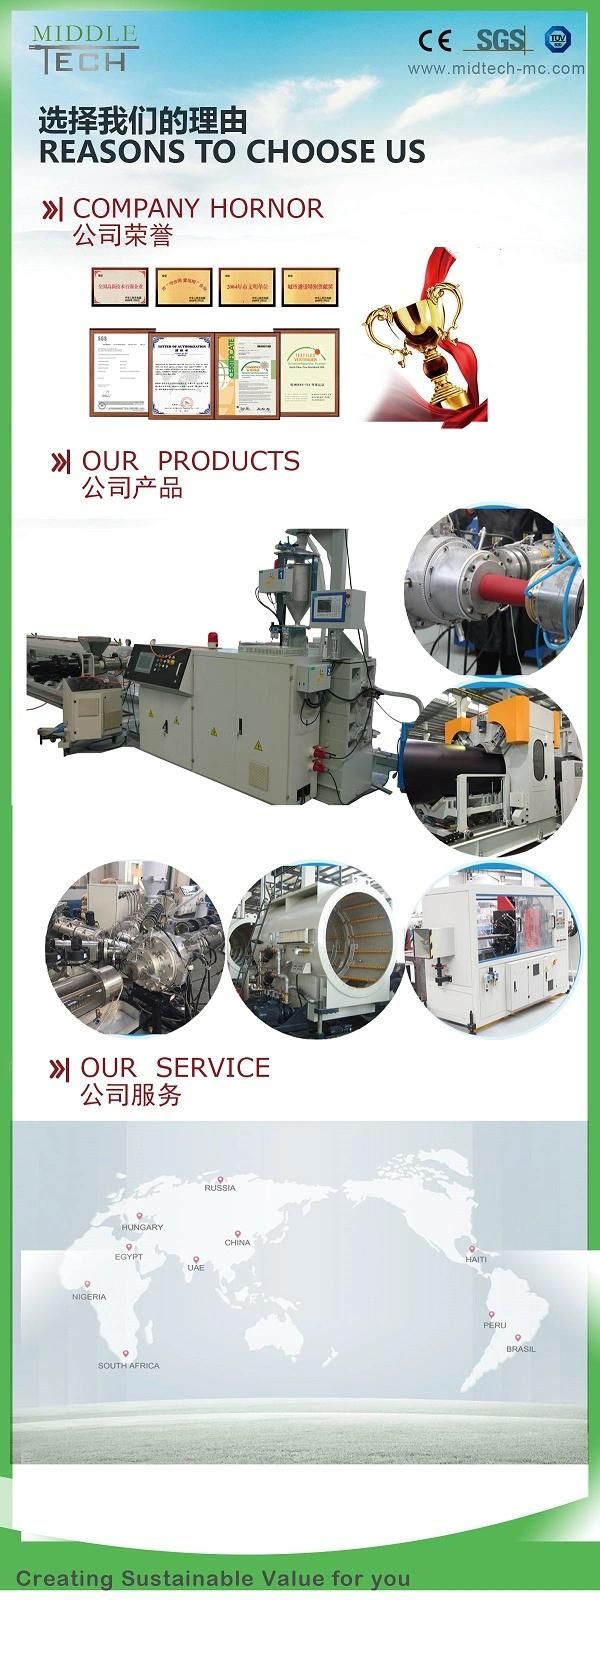 High Quality Plastic PE HDPE Drainage Pipe Production Line Machine